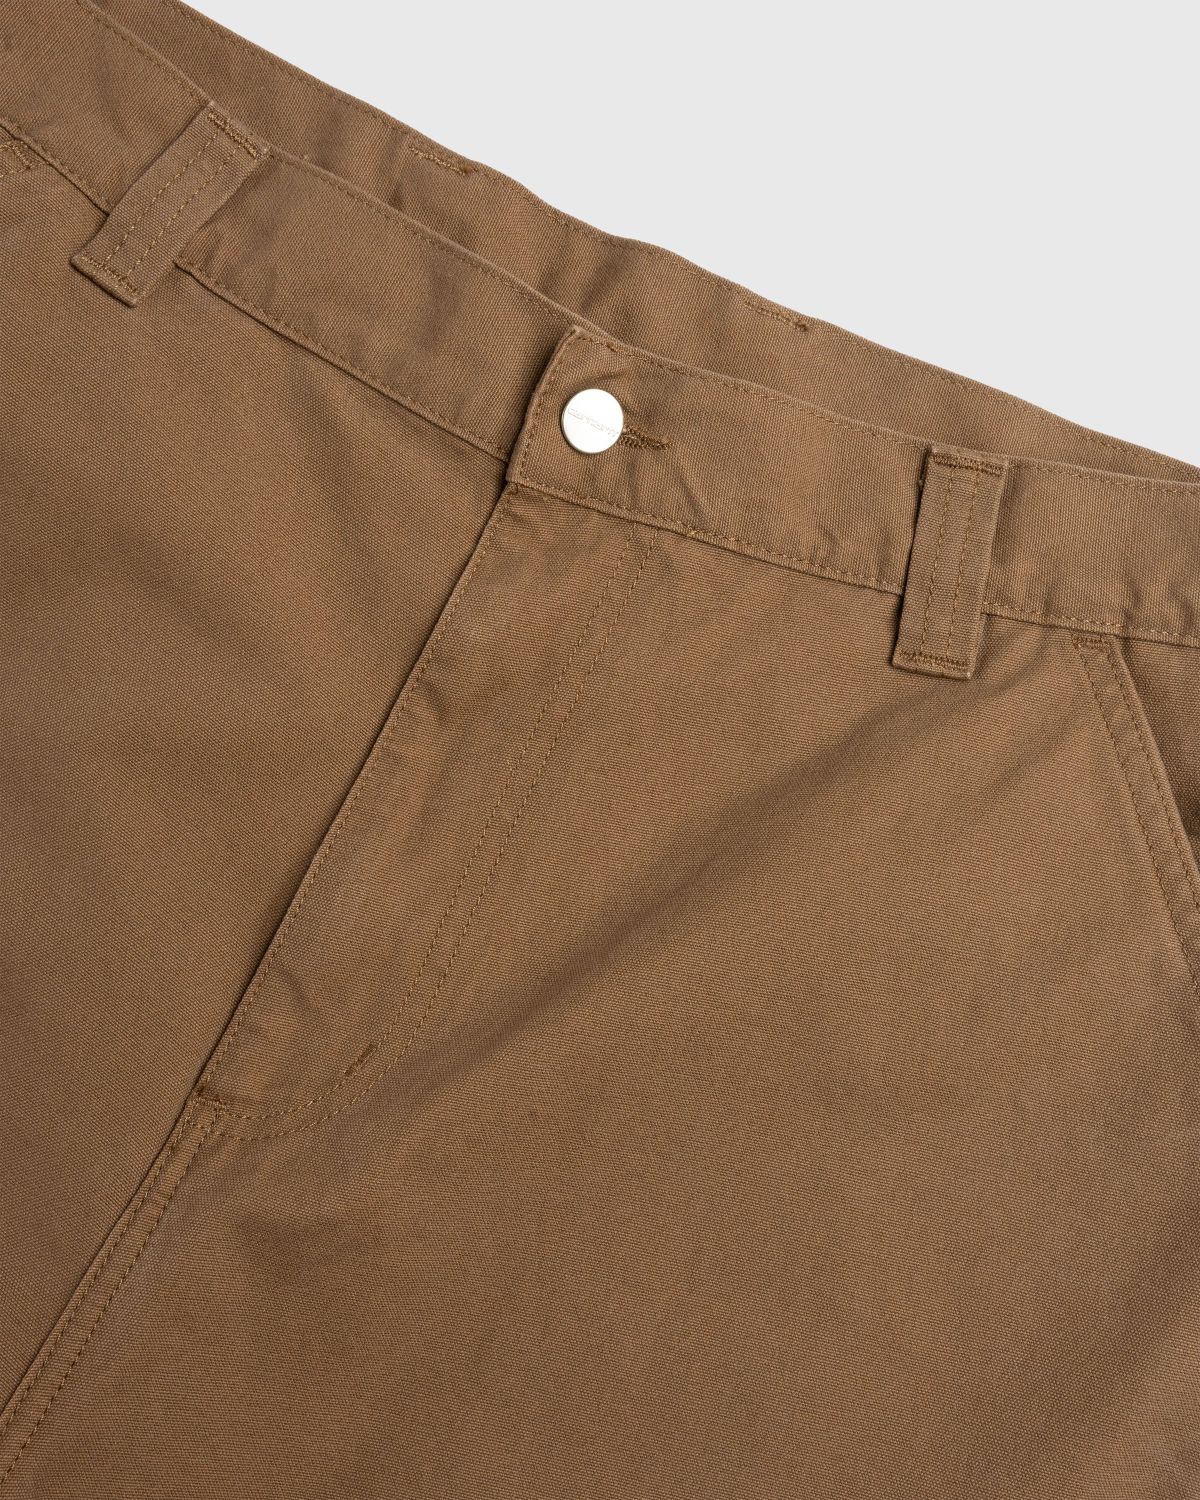 Carhartt WIP – Wide Panel Pant Rinsed Hamilton Brown - Pants - Brown - Image 4